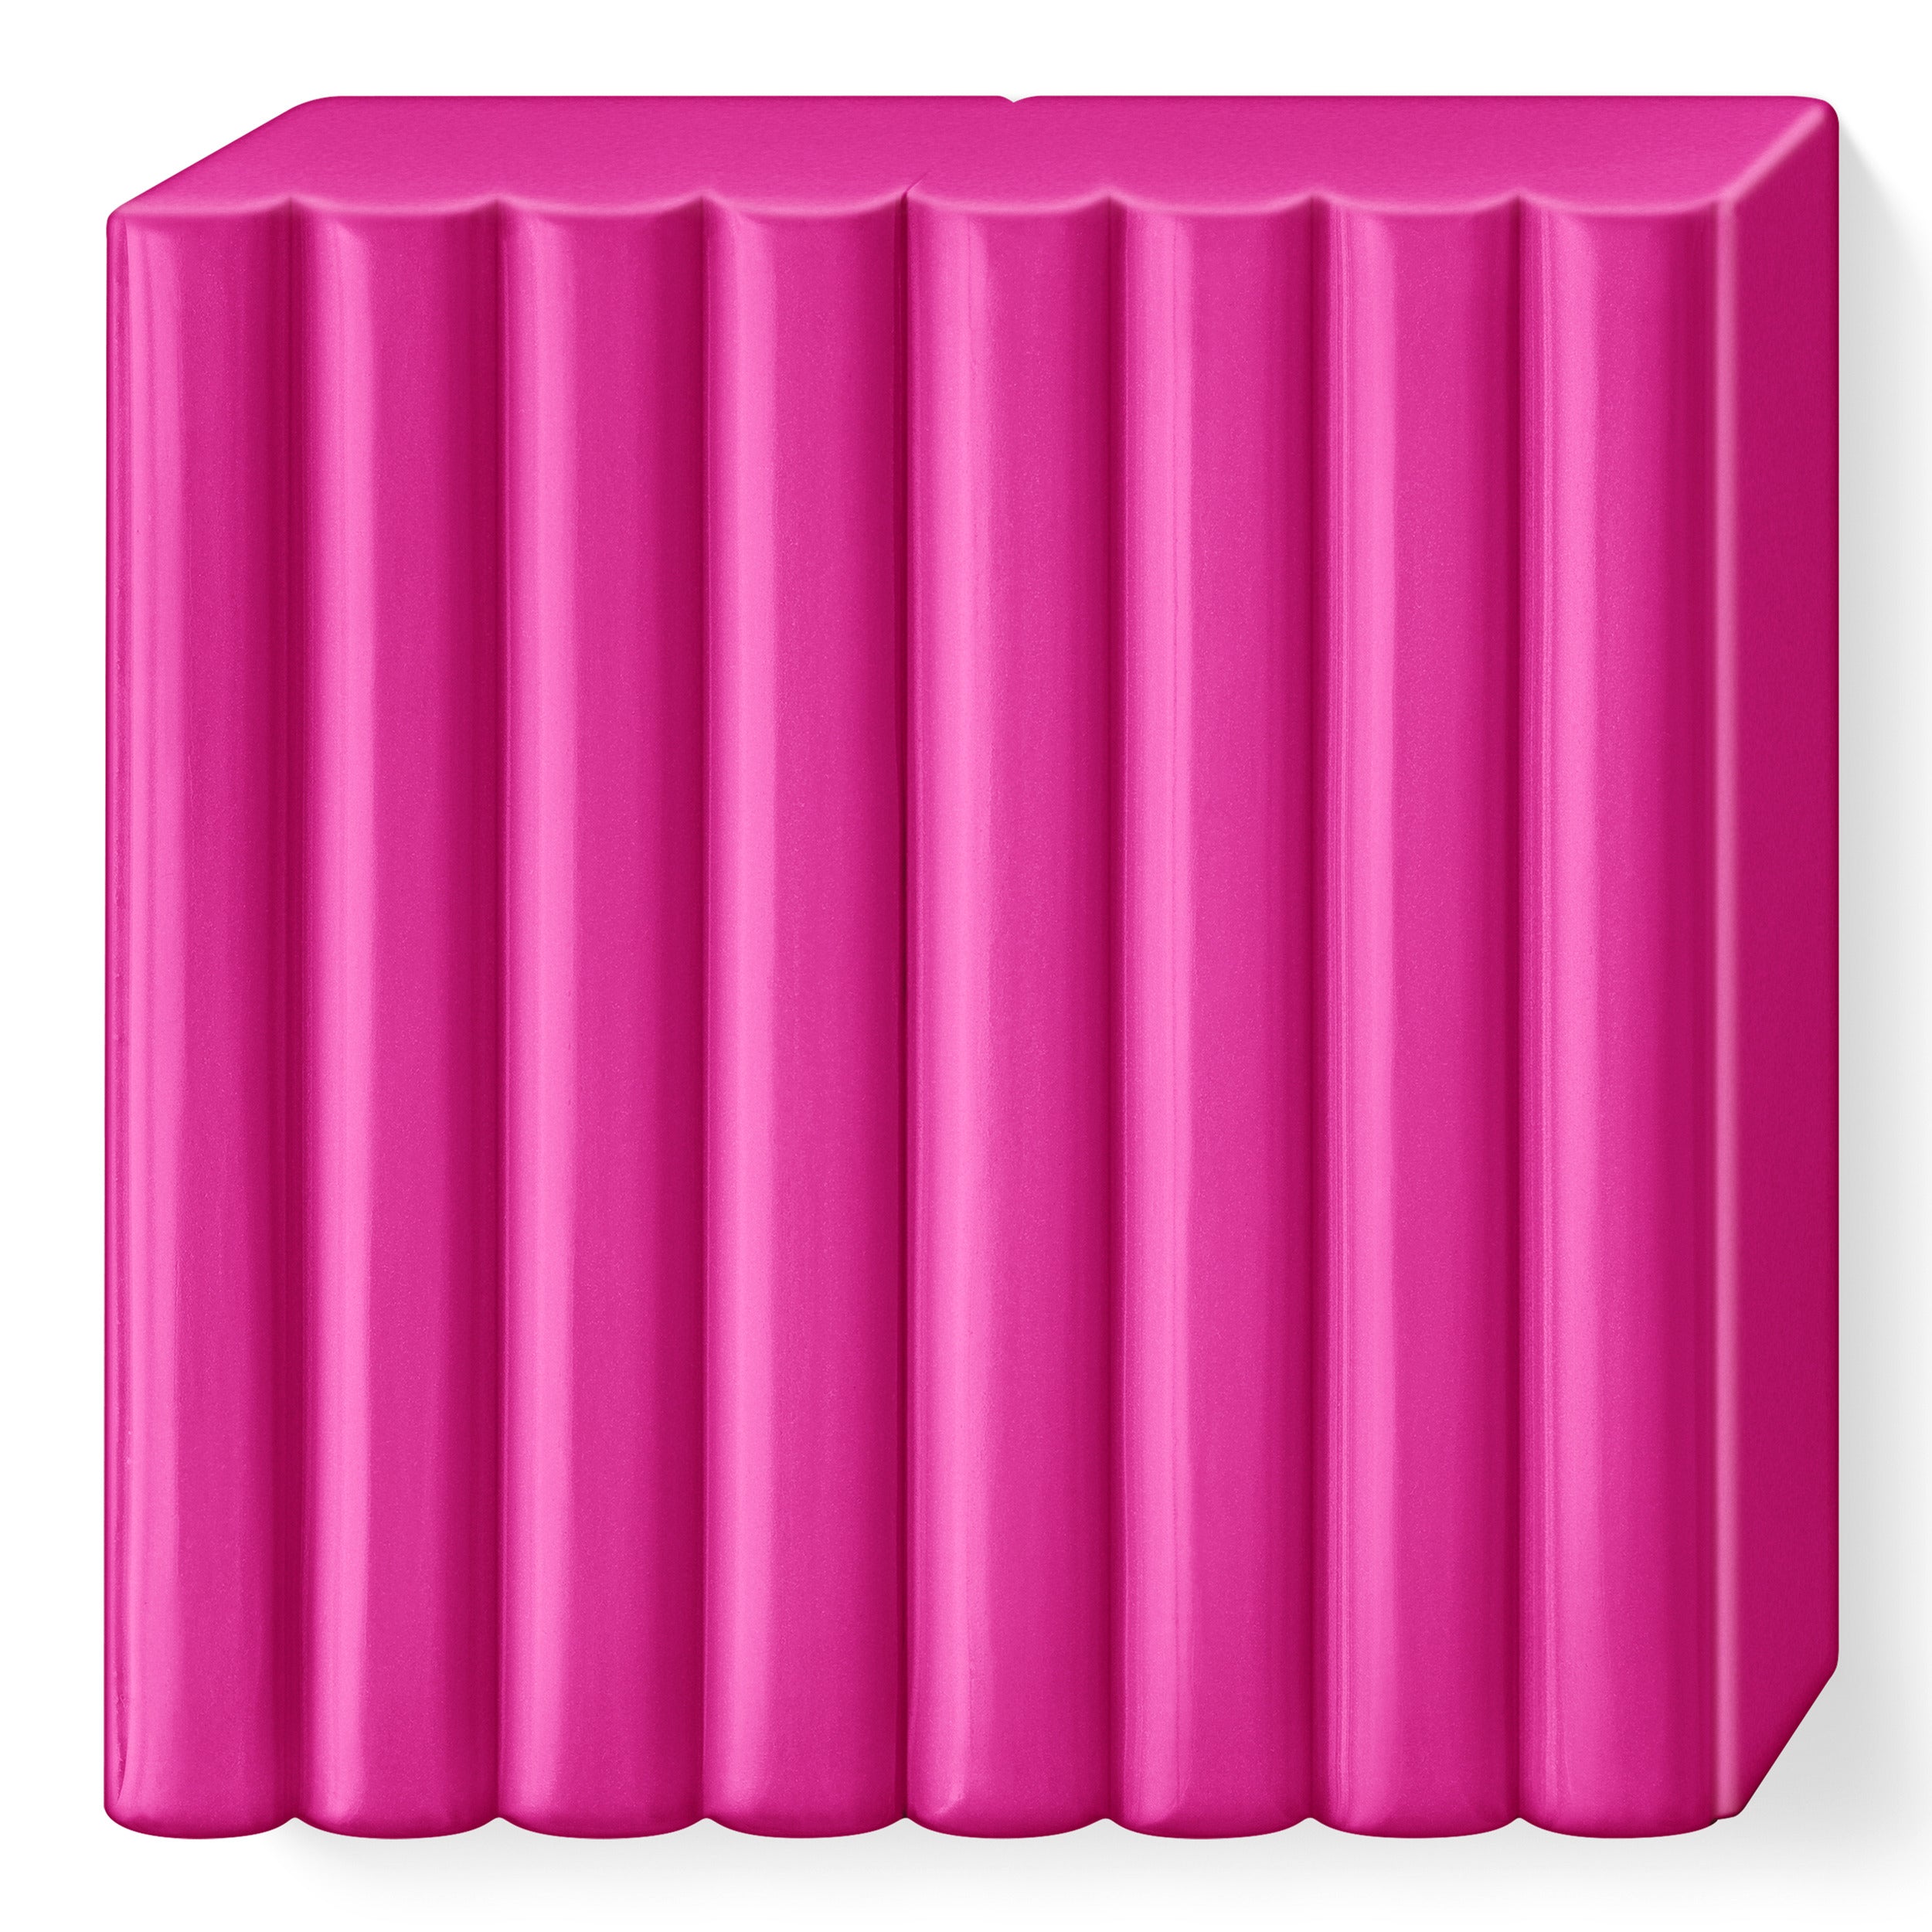 Fimo Soft Polymer Clay Standard Block 57g (2oz) - Raspberry